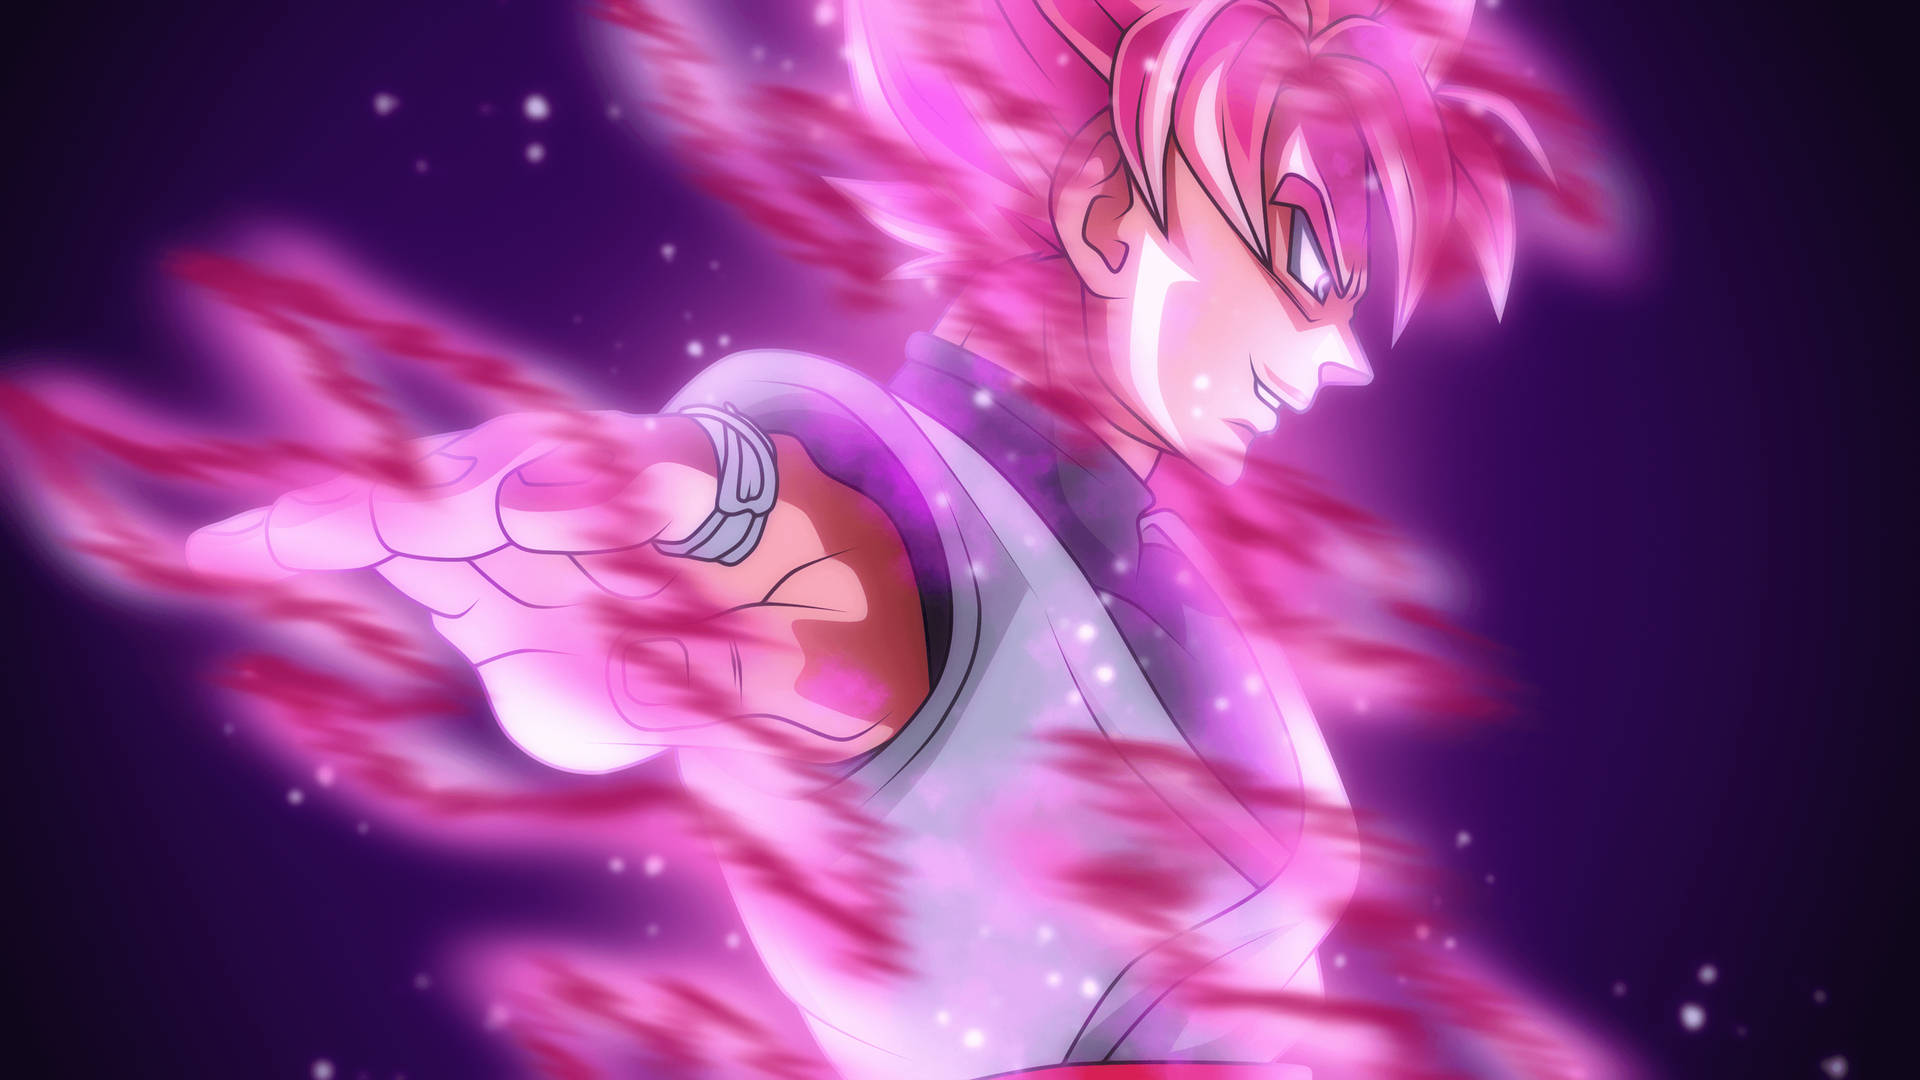 Caption: Intense Power - Black Goku In Super Saiyan Form